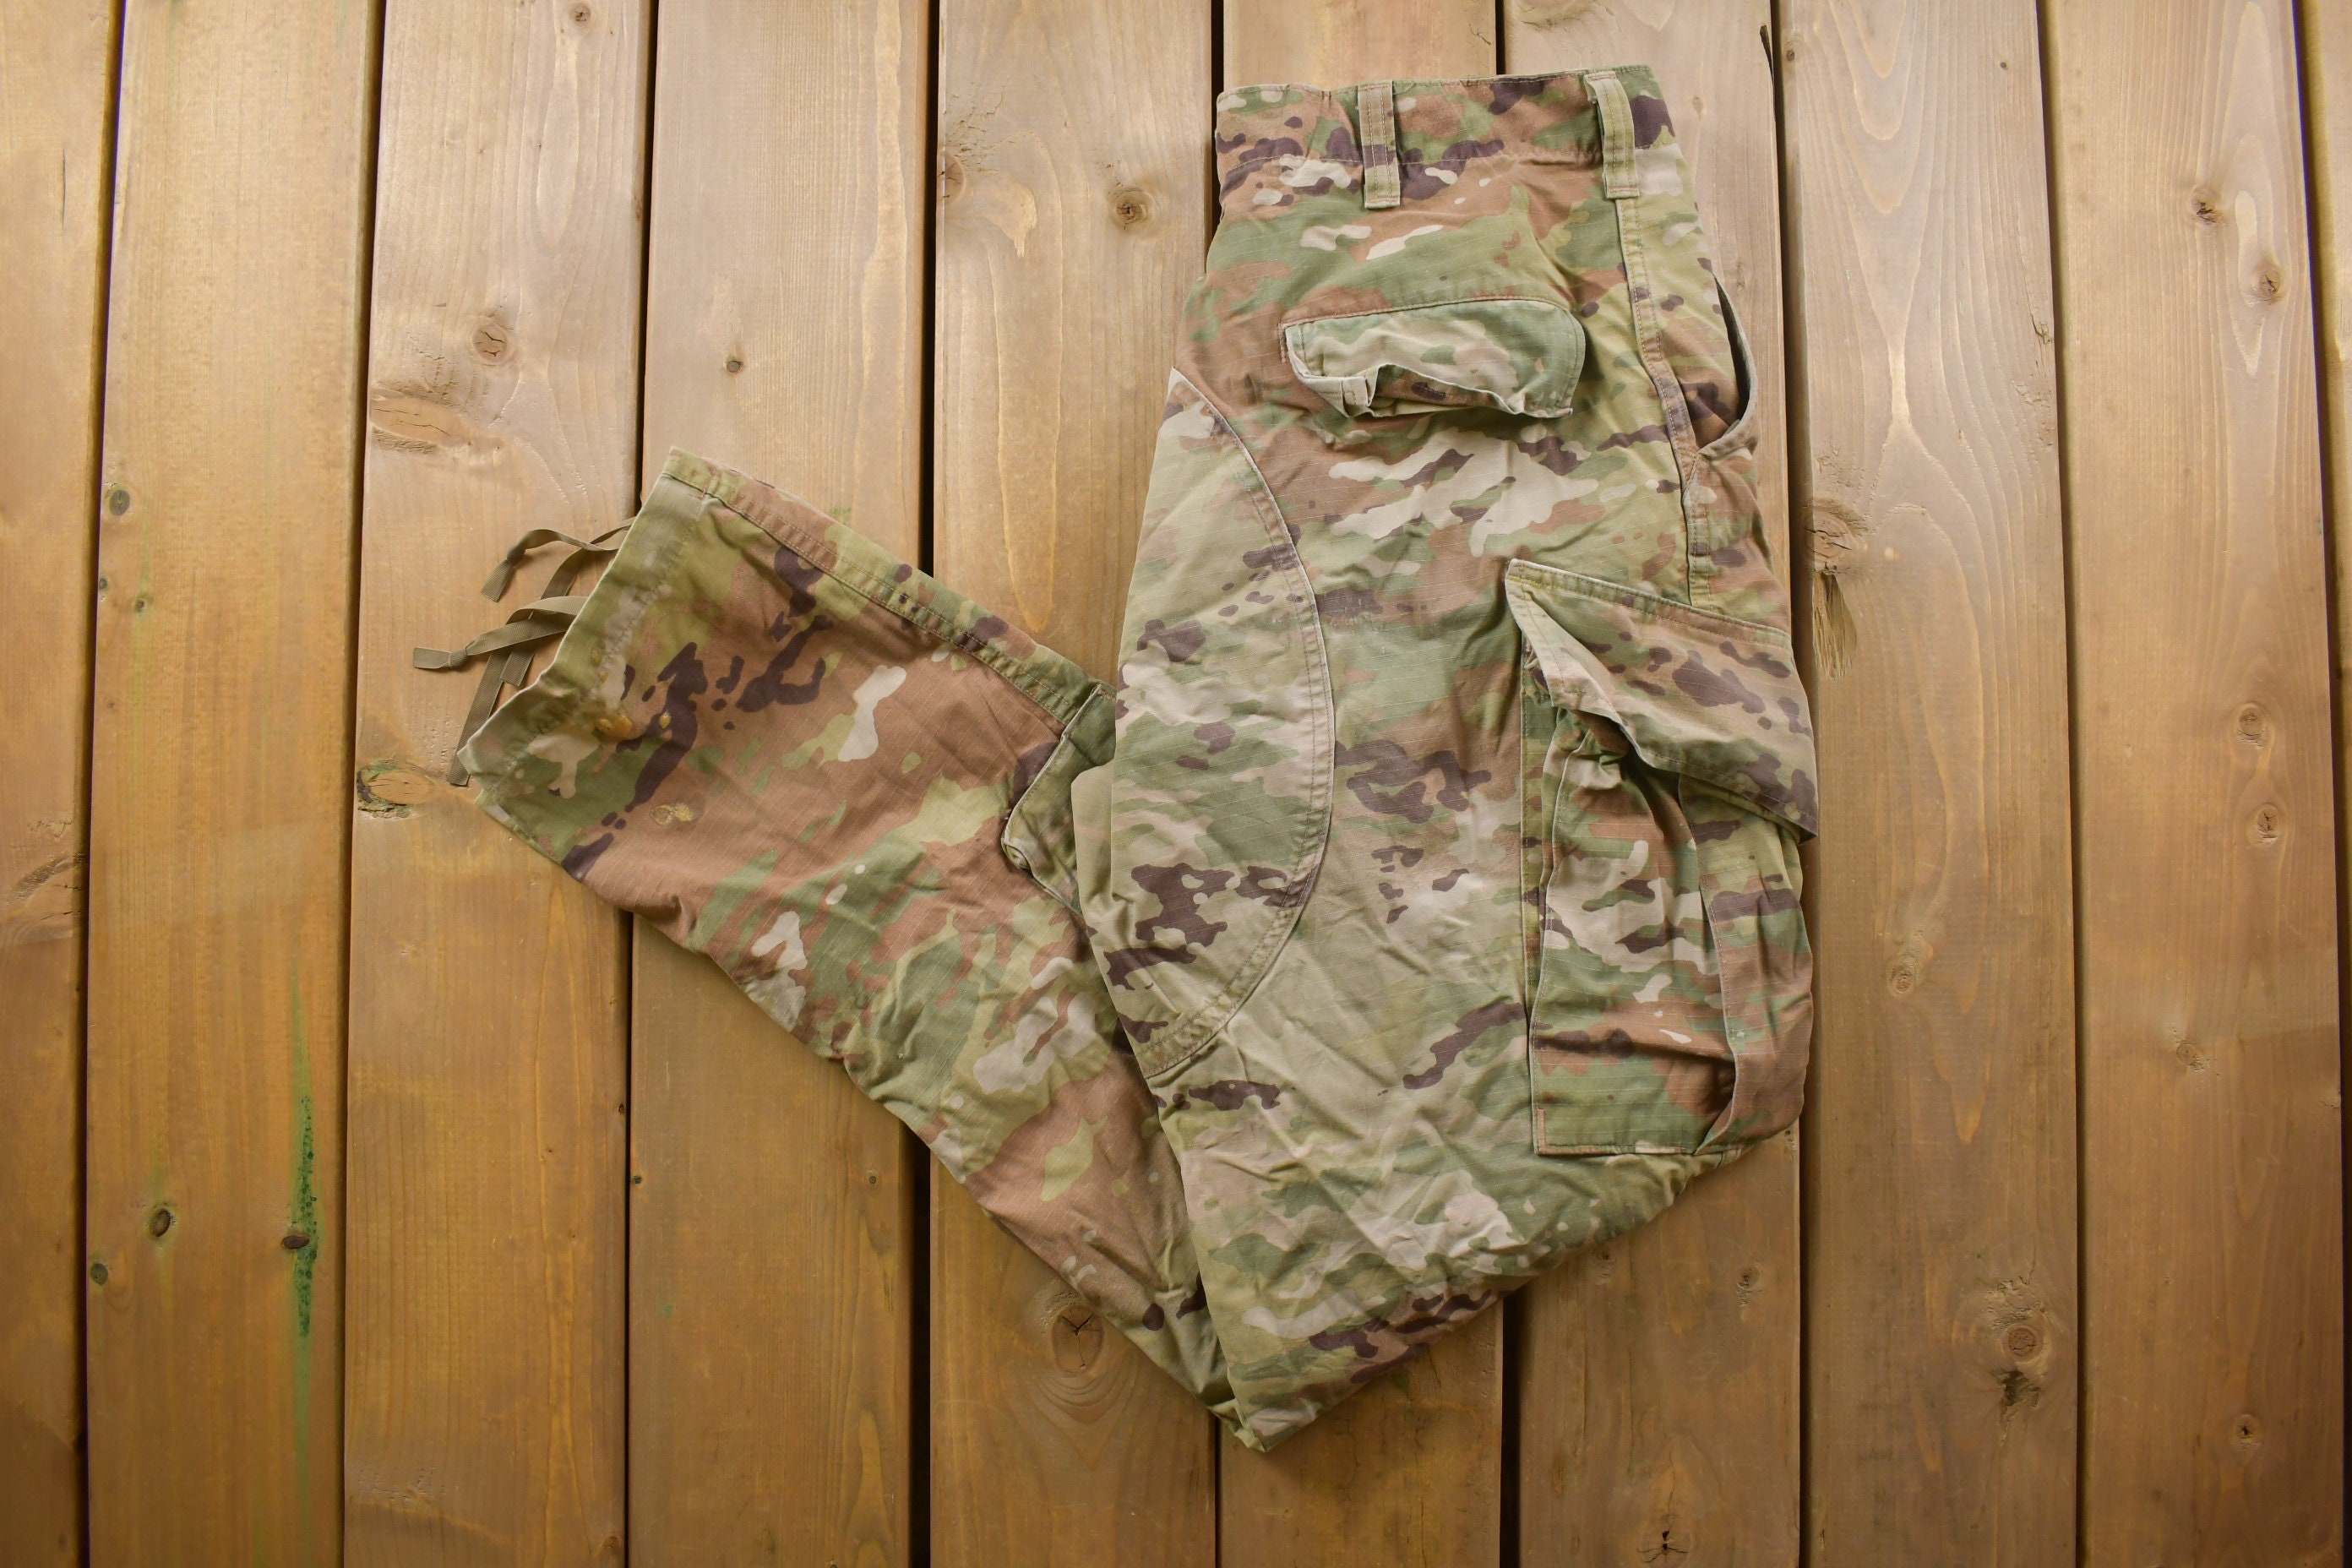 Professional Mens Tactical Pants Military Pants and Mens Work Pants